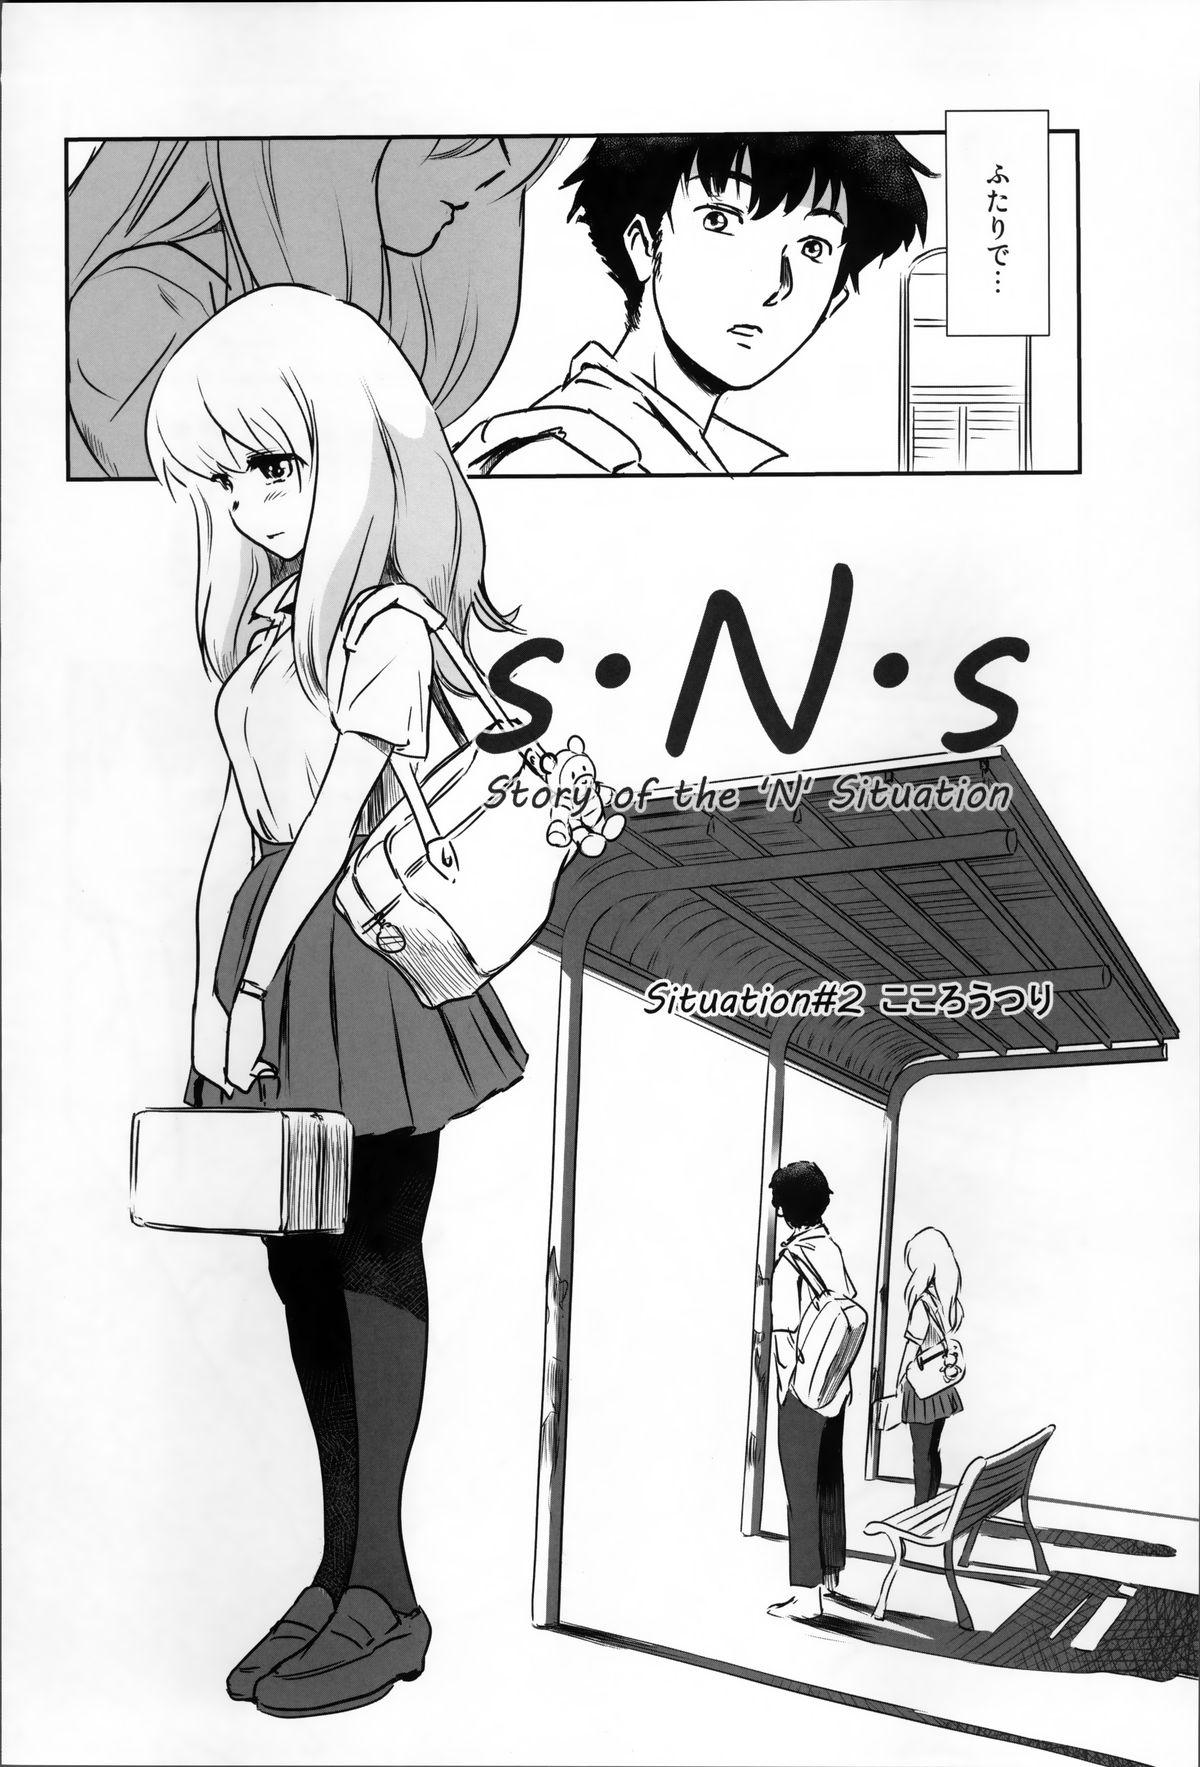 Nurse Story of the 'N' Situation - Situation#2 Kokoro Utsuri Cum Shot - Page 4